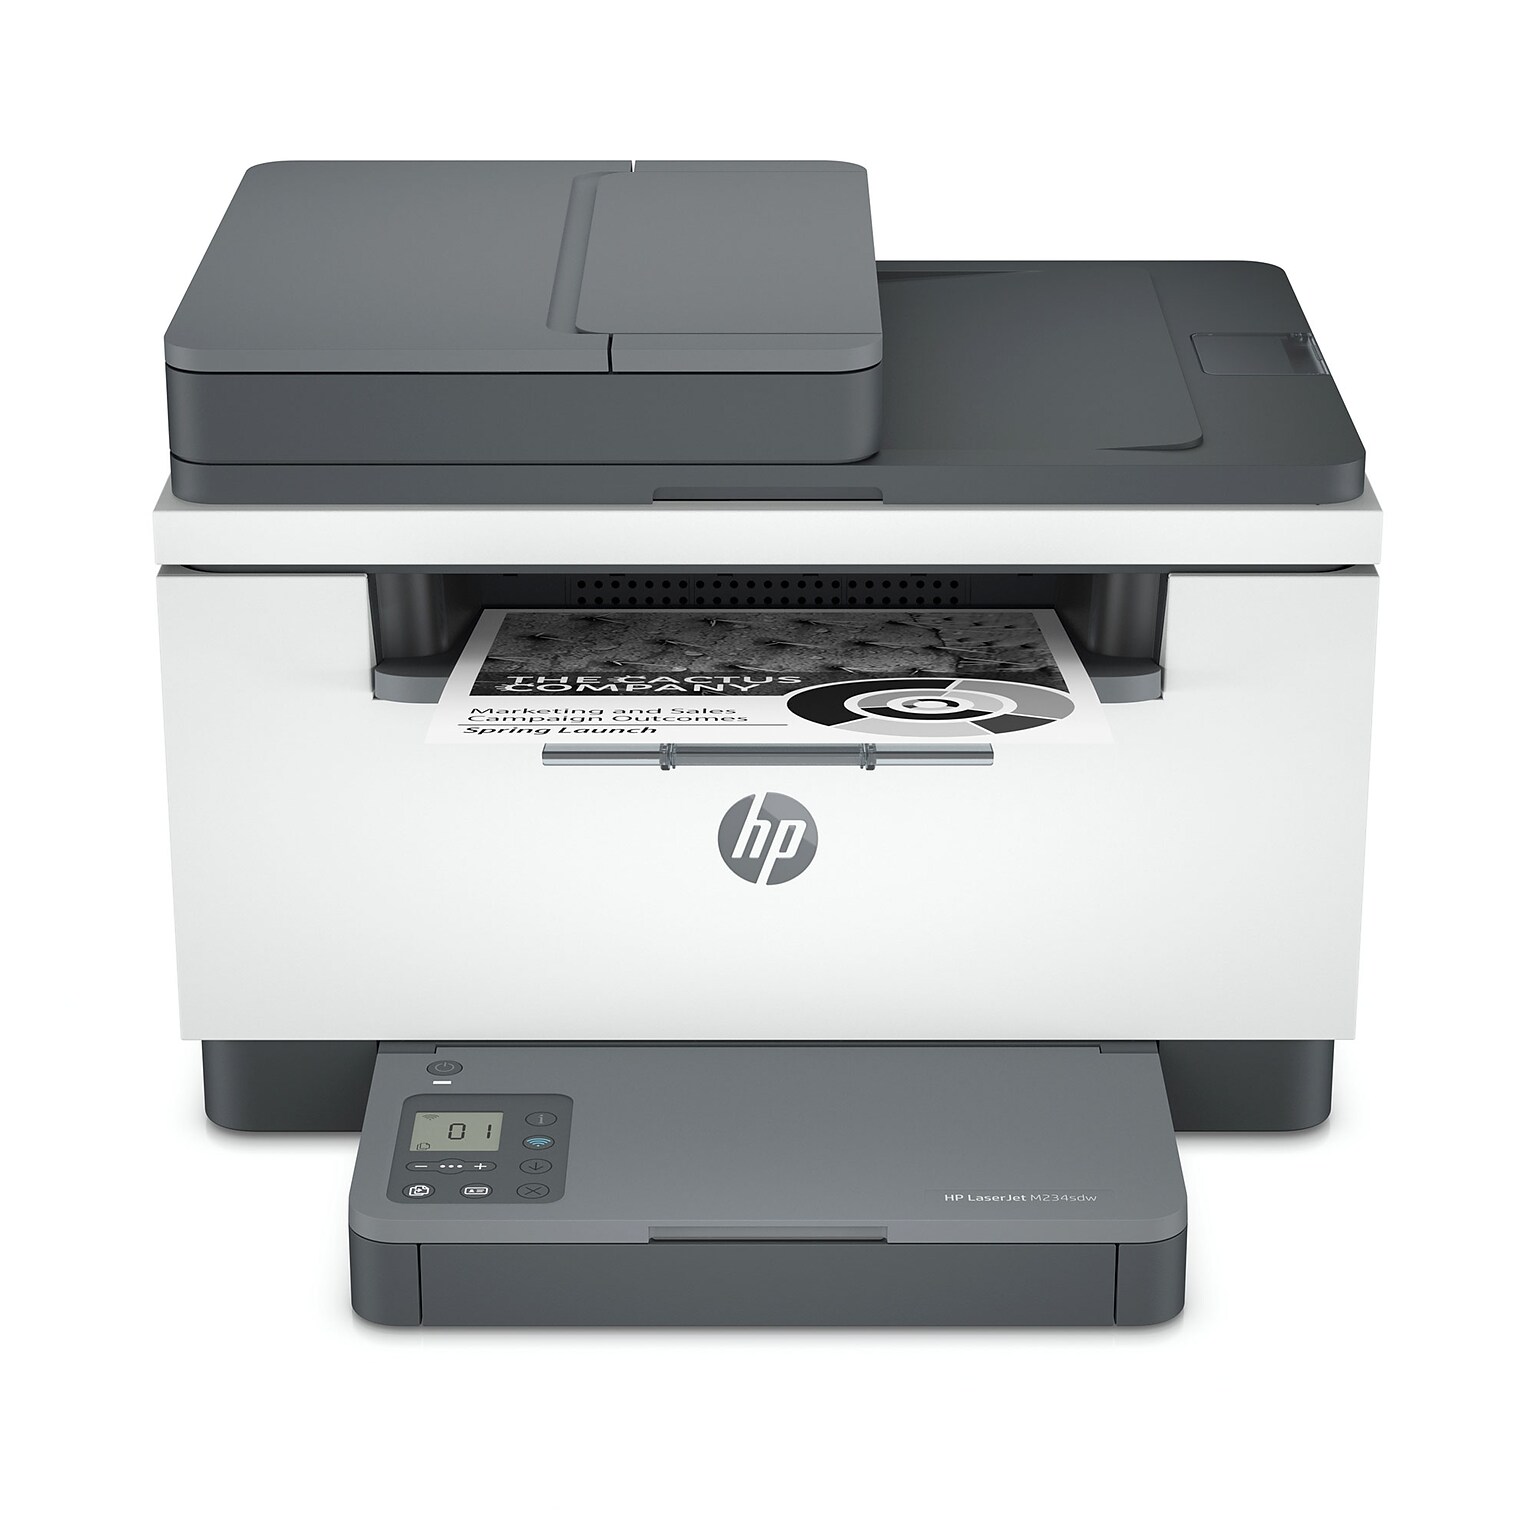 HP LaserJet MFP M234sdw Wireless Black/White All-in-One Laser Printer, Instant Ink Ready (6GX01F#BGJ)